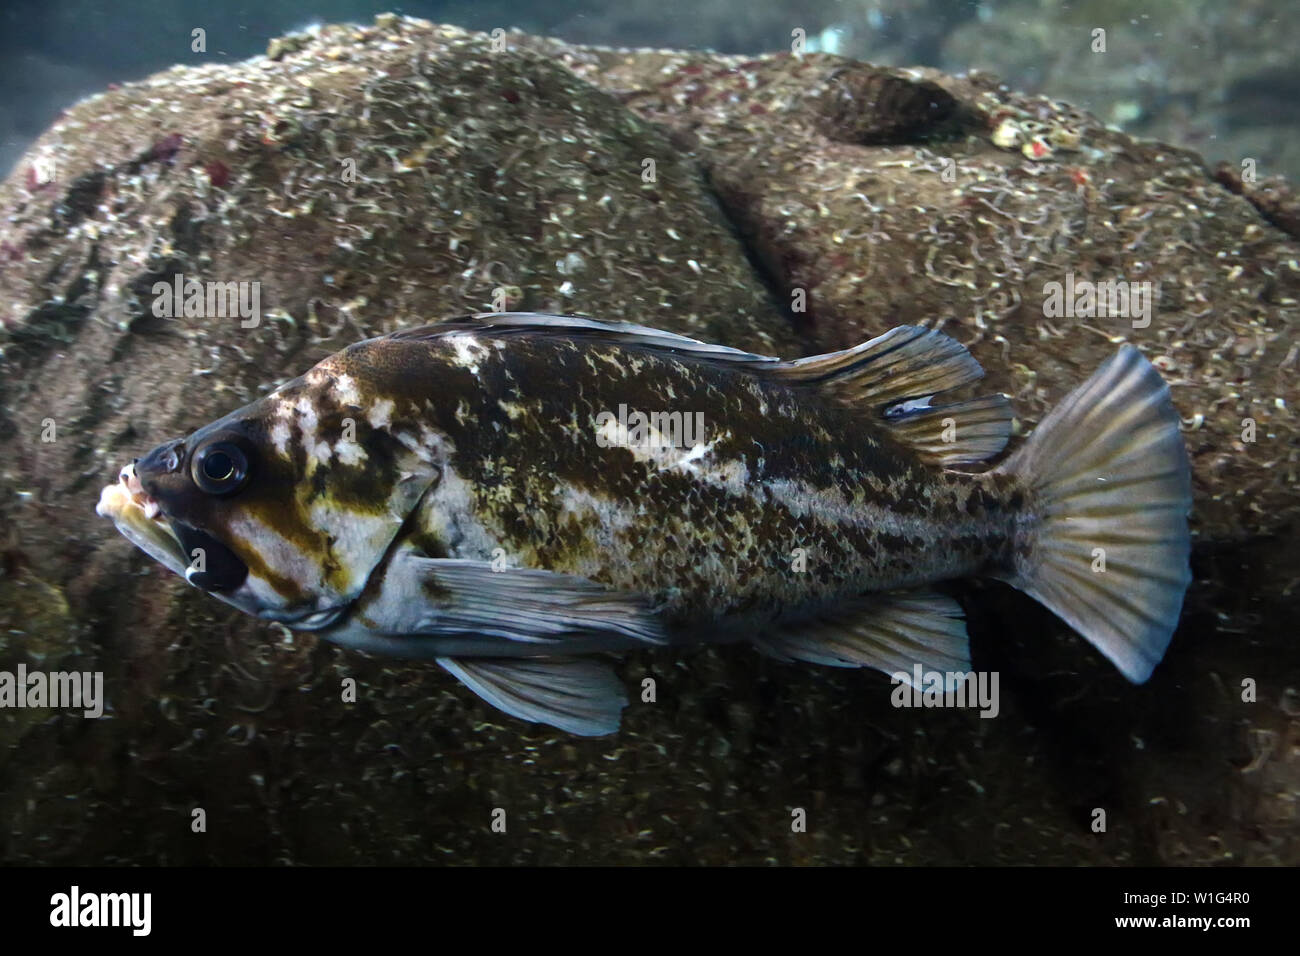 Close up view of the Brown rockfish (Sebastes auriculatus). Stock Photo